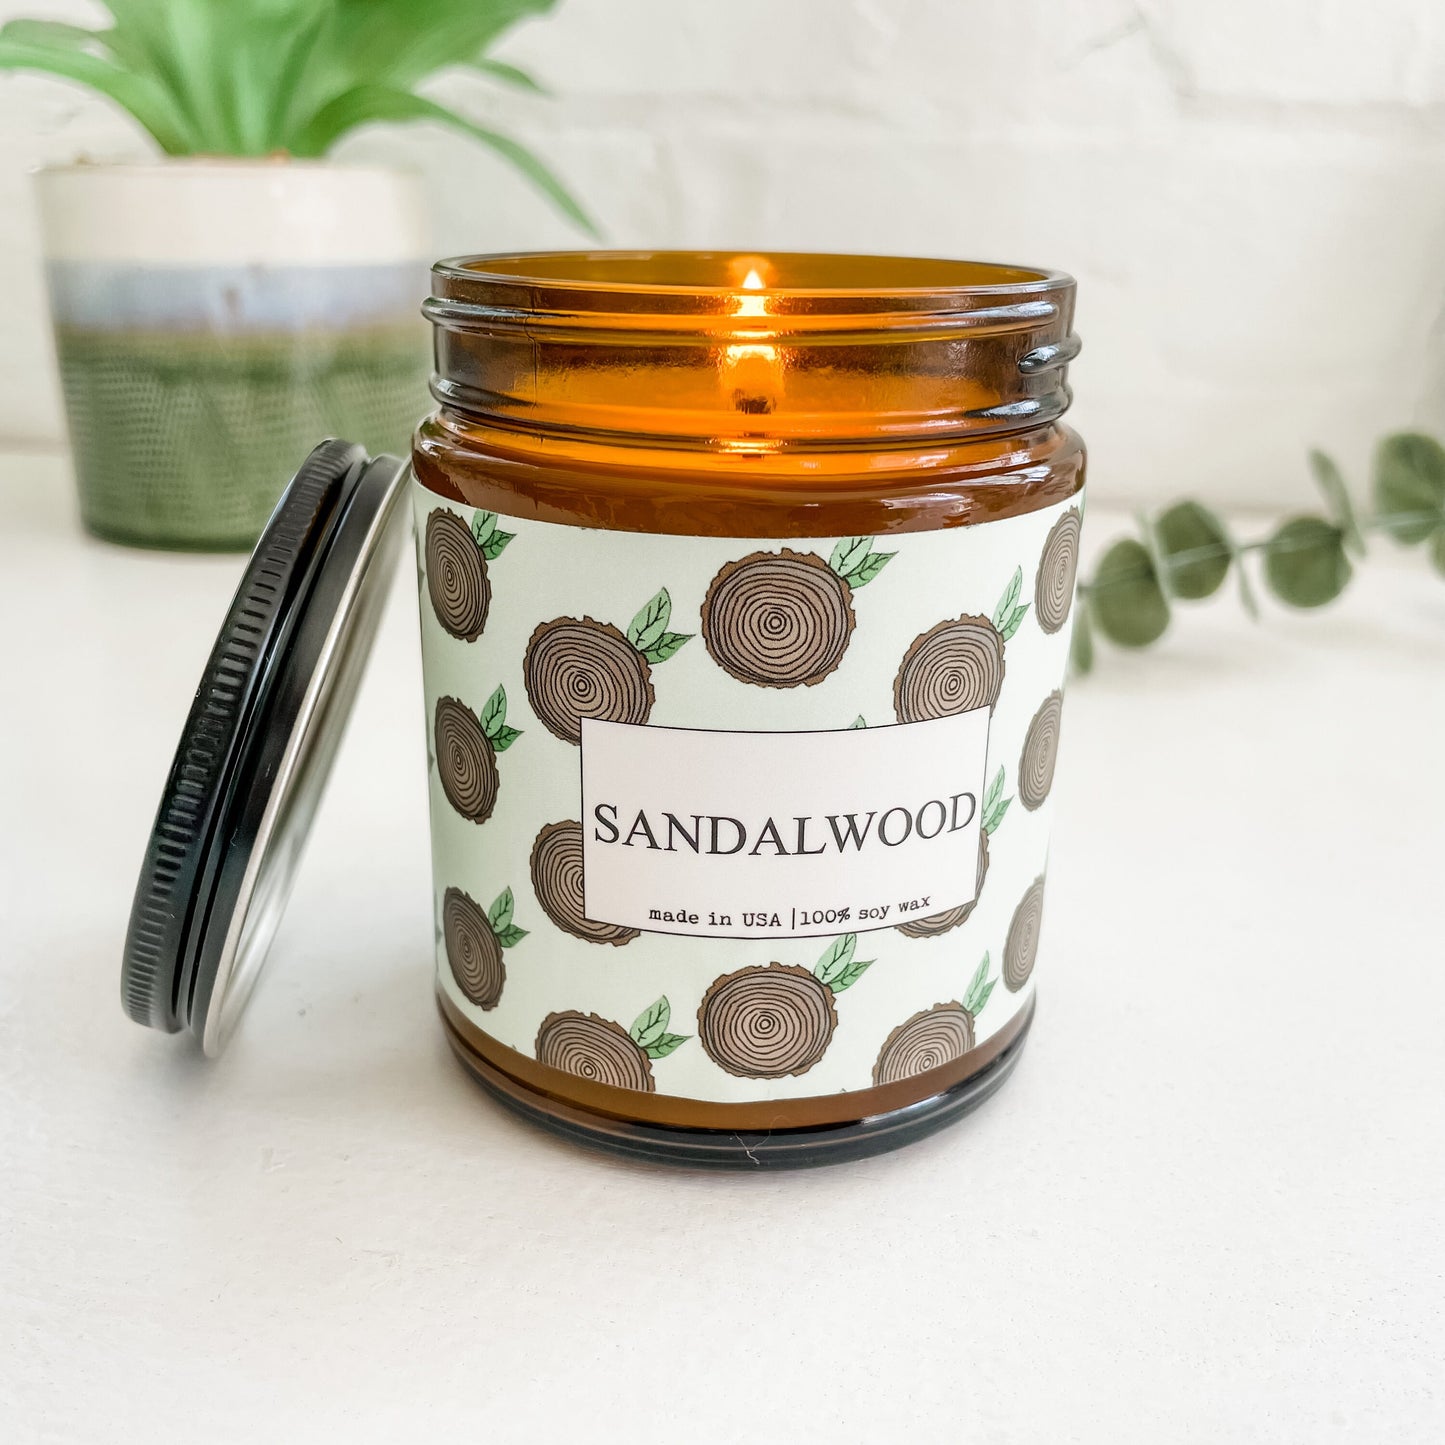 Sandalwood Scented Candle - 9oz Glass Jar Candle